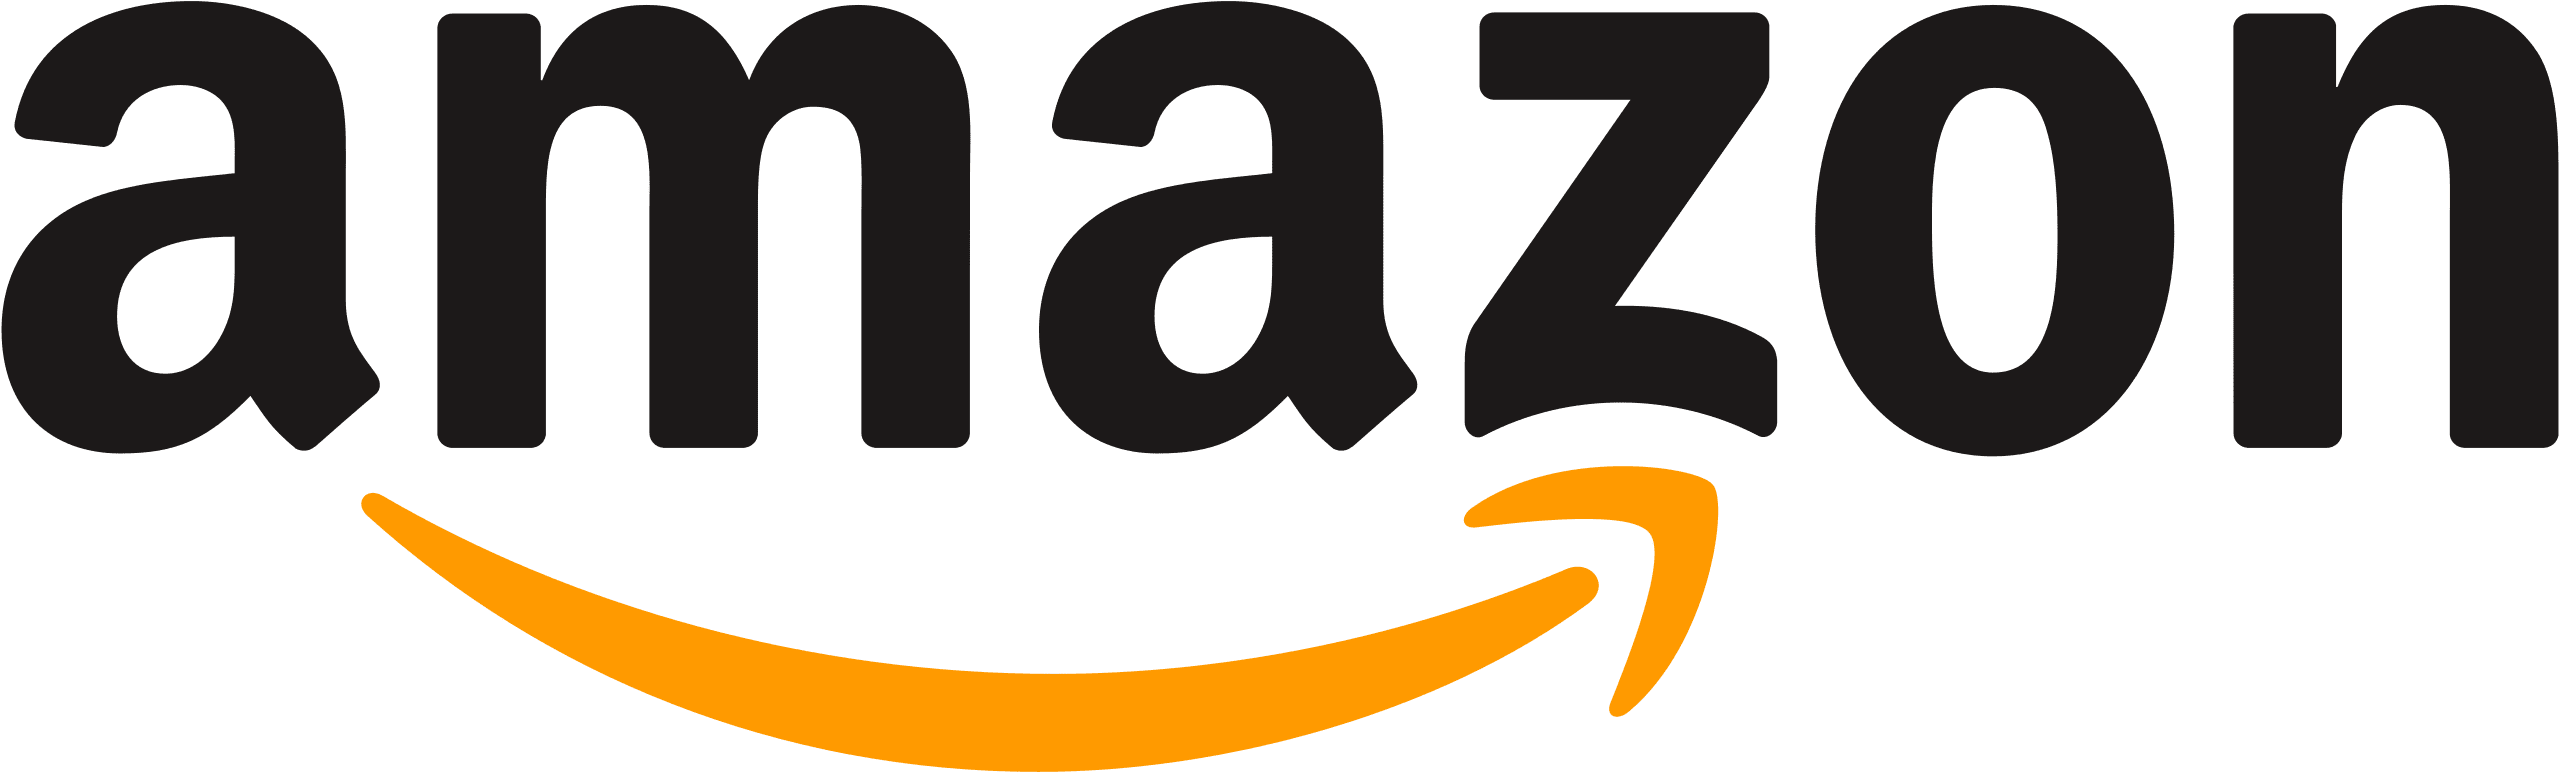 Indonesia Amazon Authorized Store